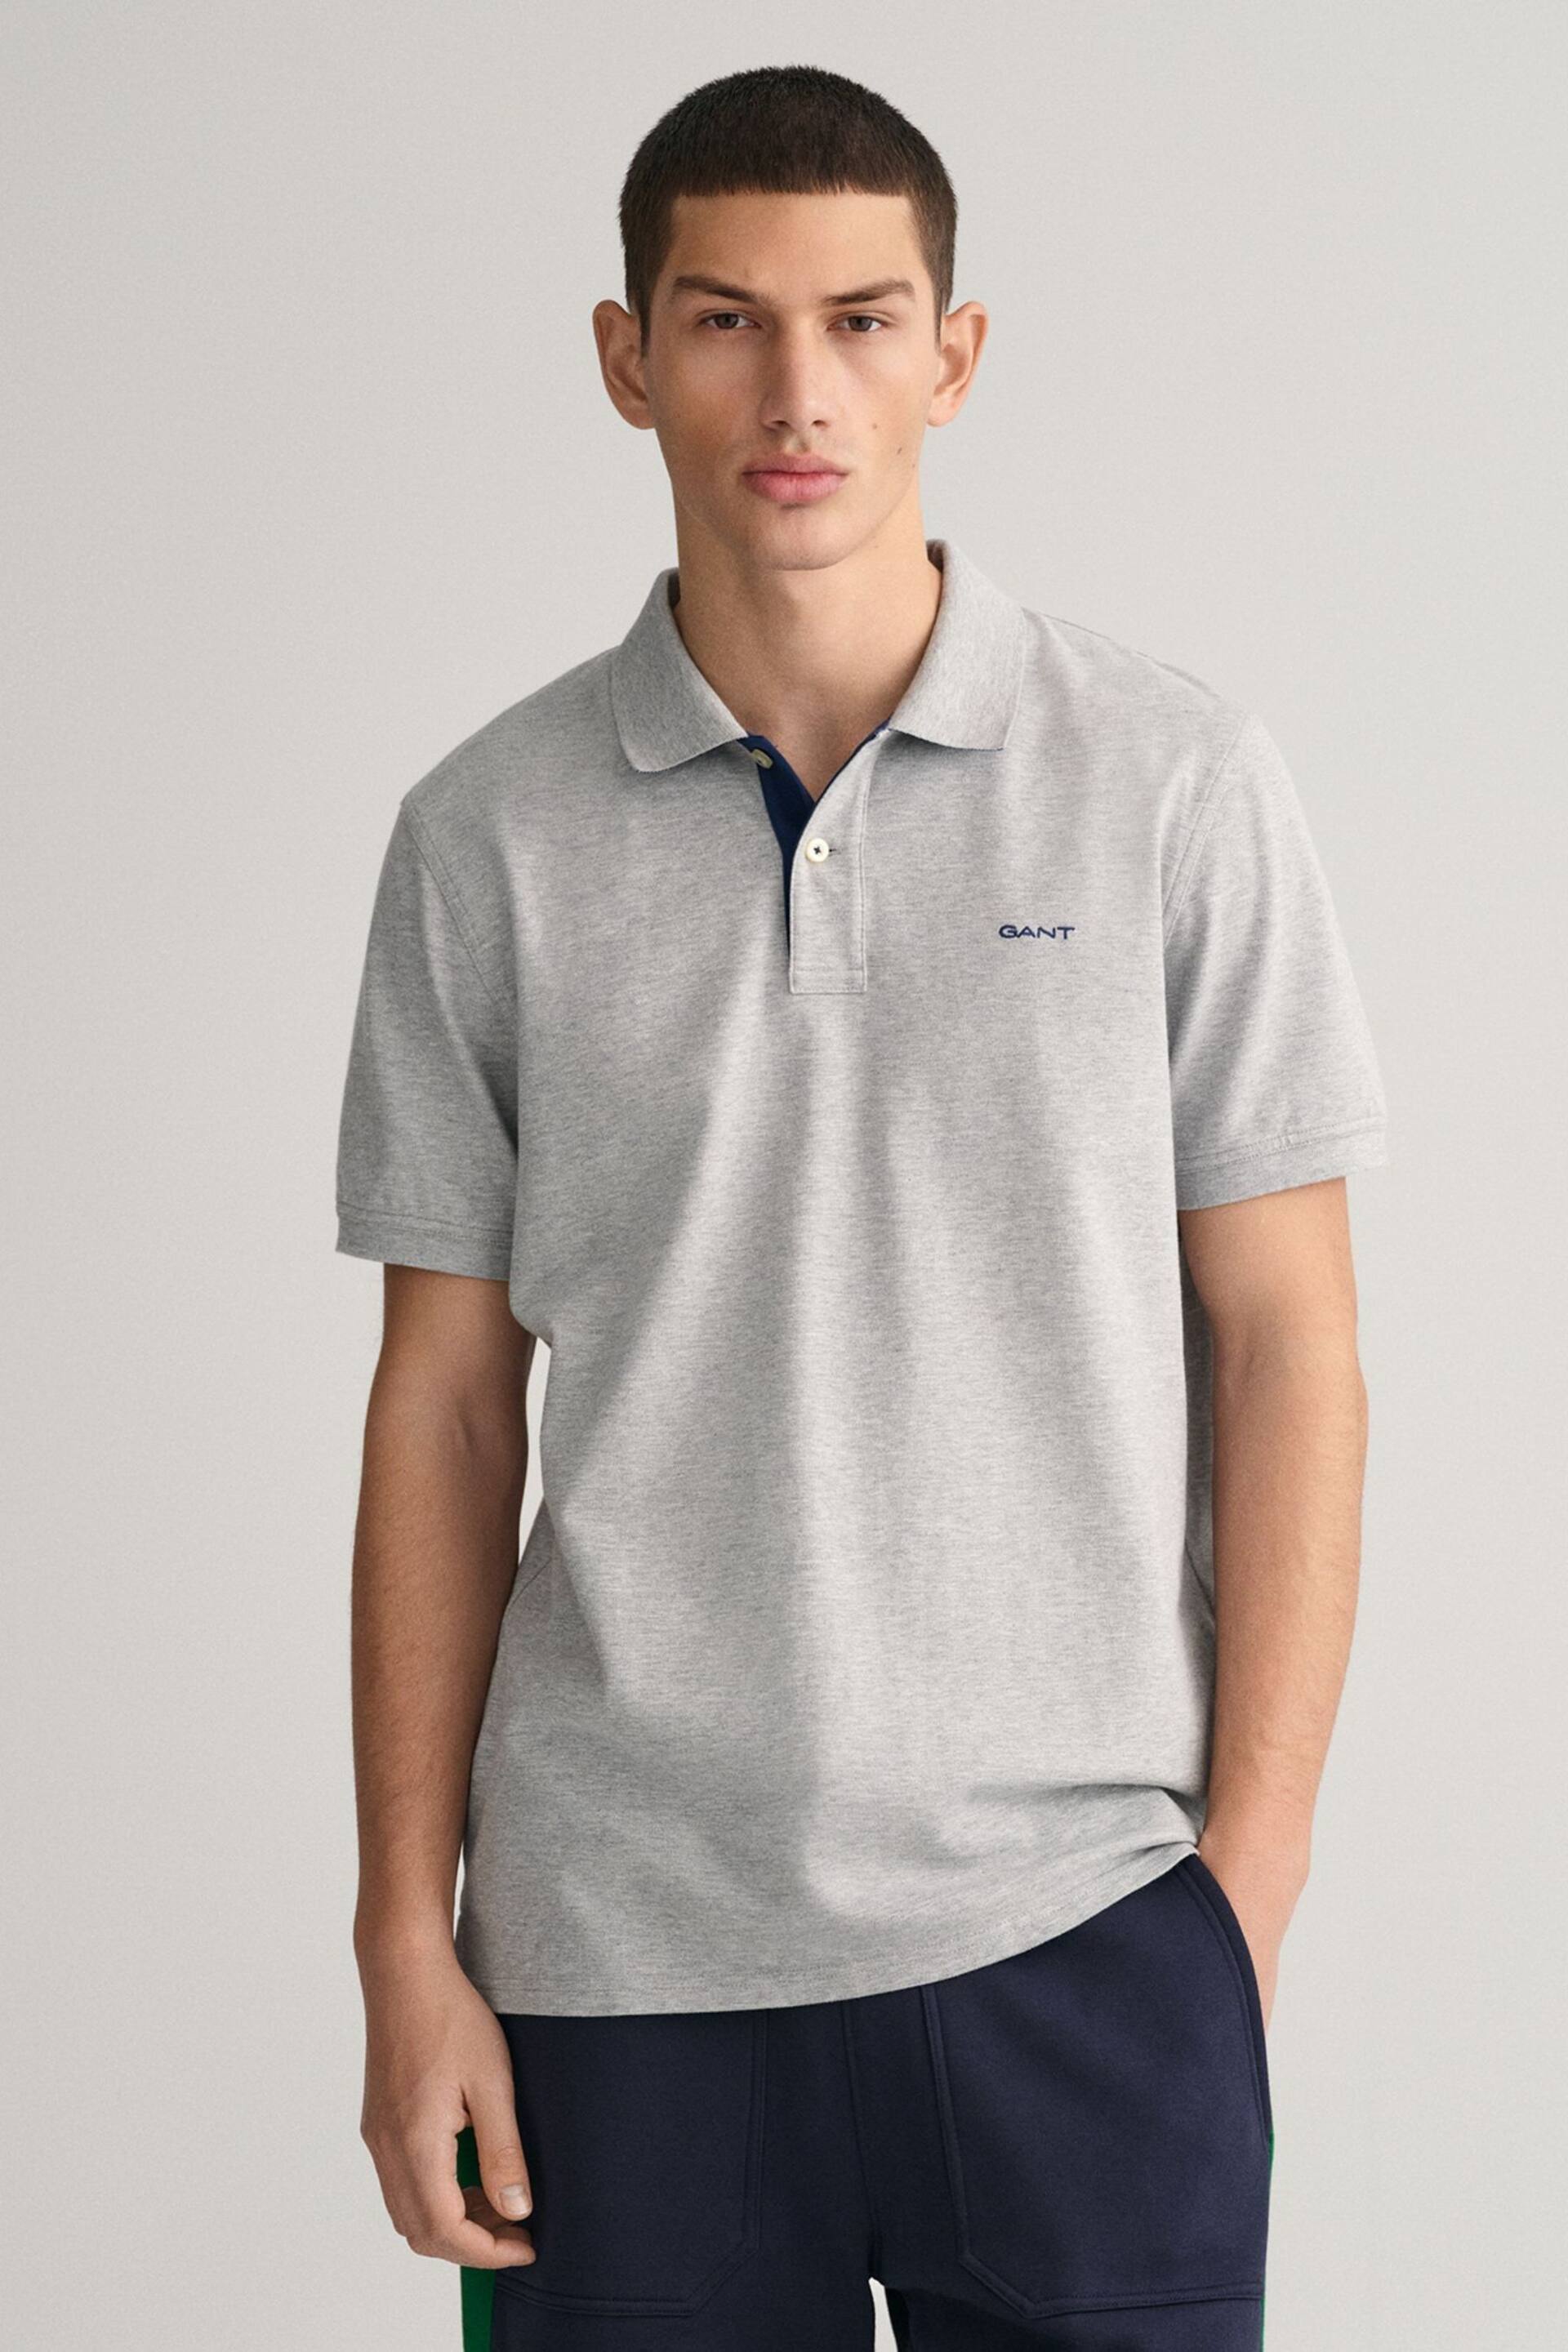 GANT Contrast Collar Polo Shirt - Image 1 of 4